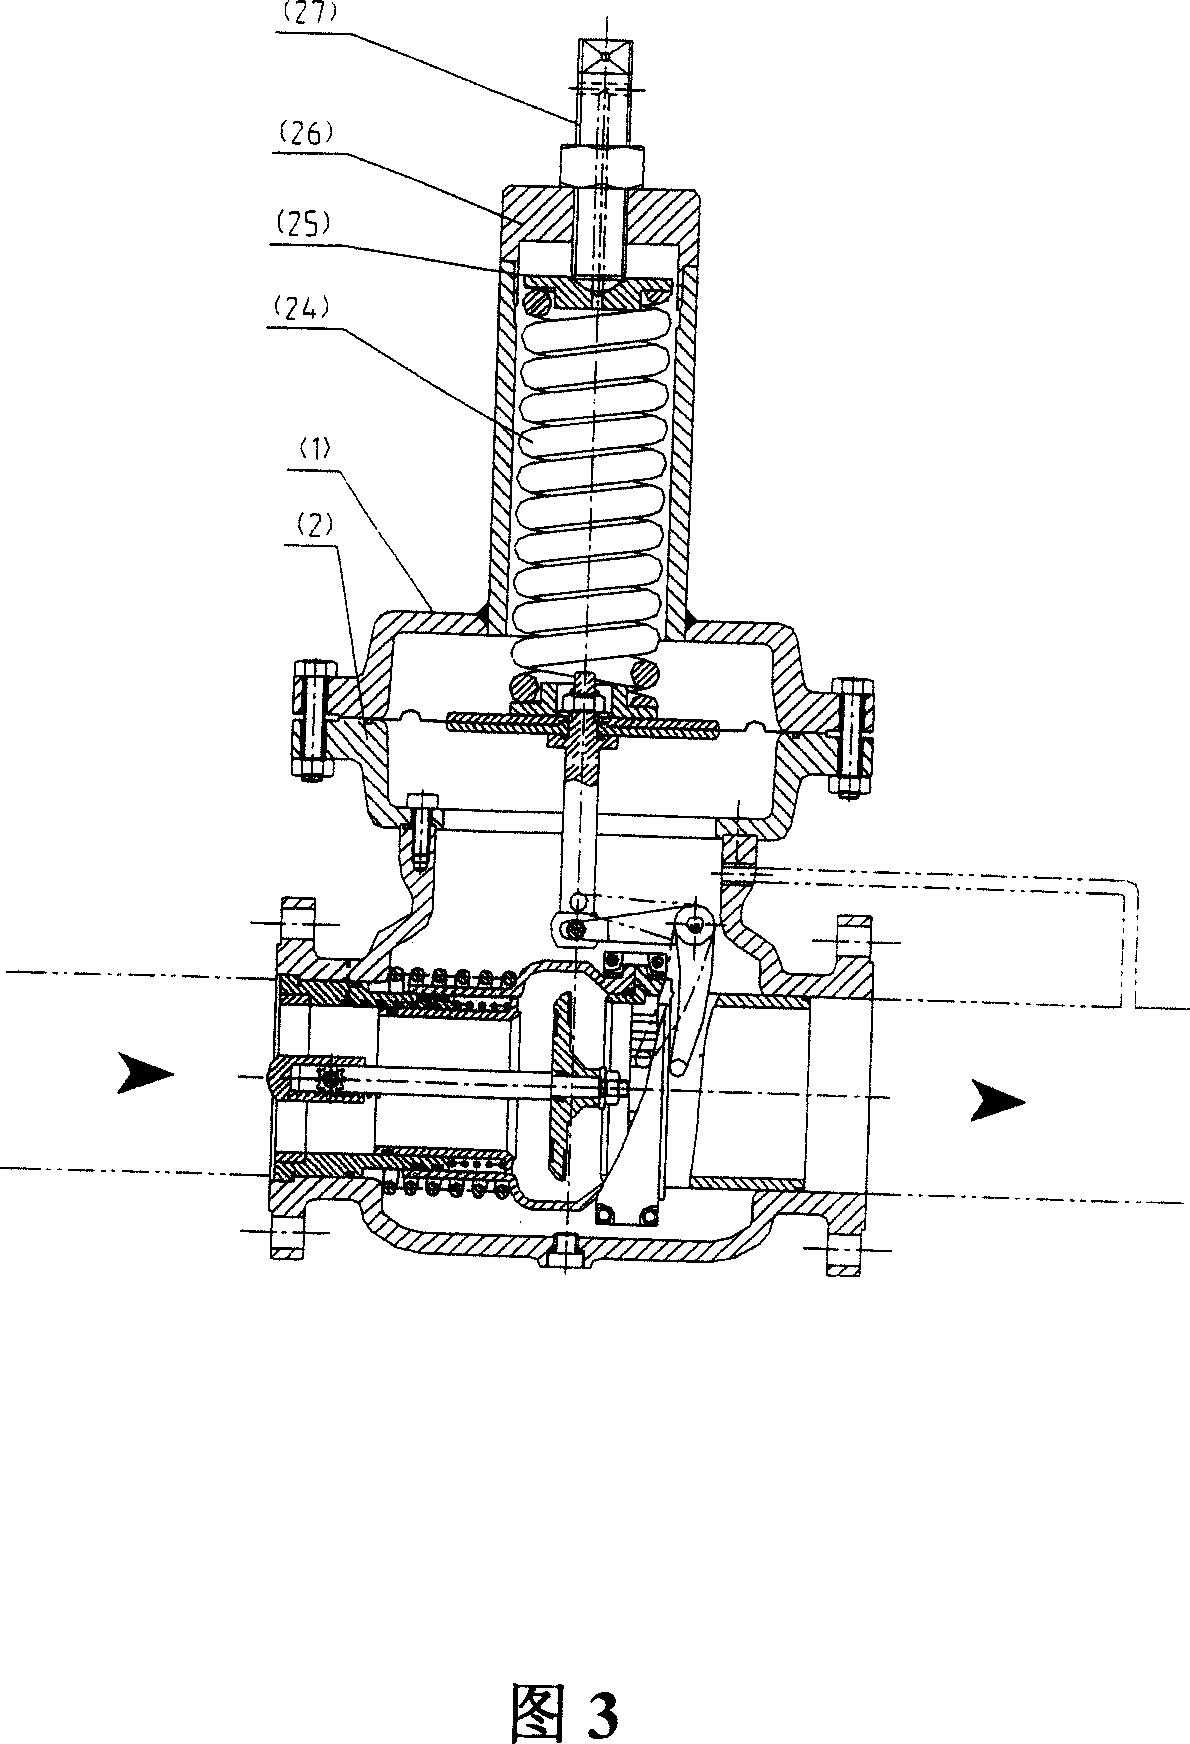 Top-loaded axial flow pressure regulator